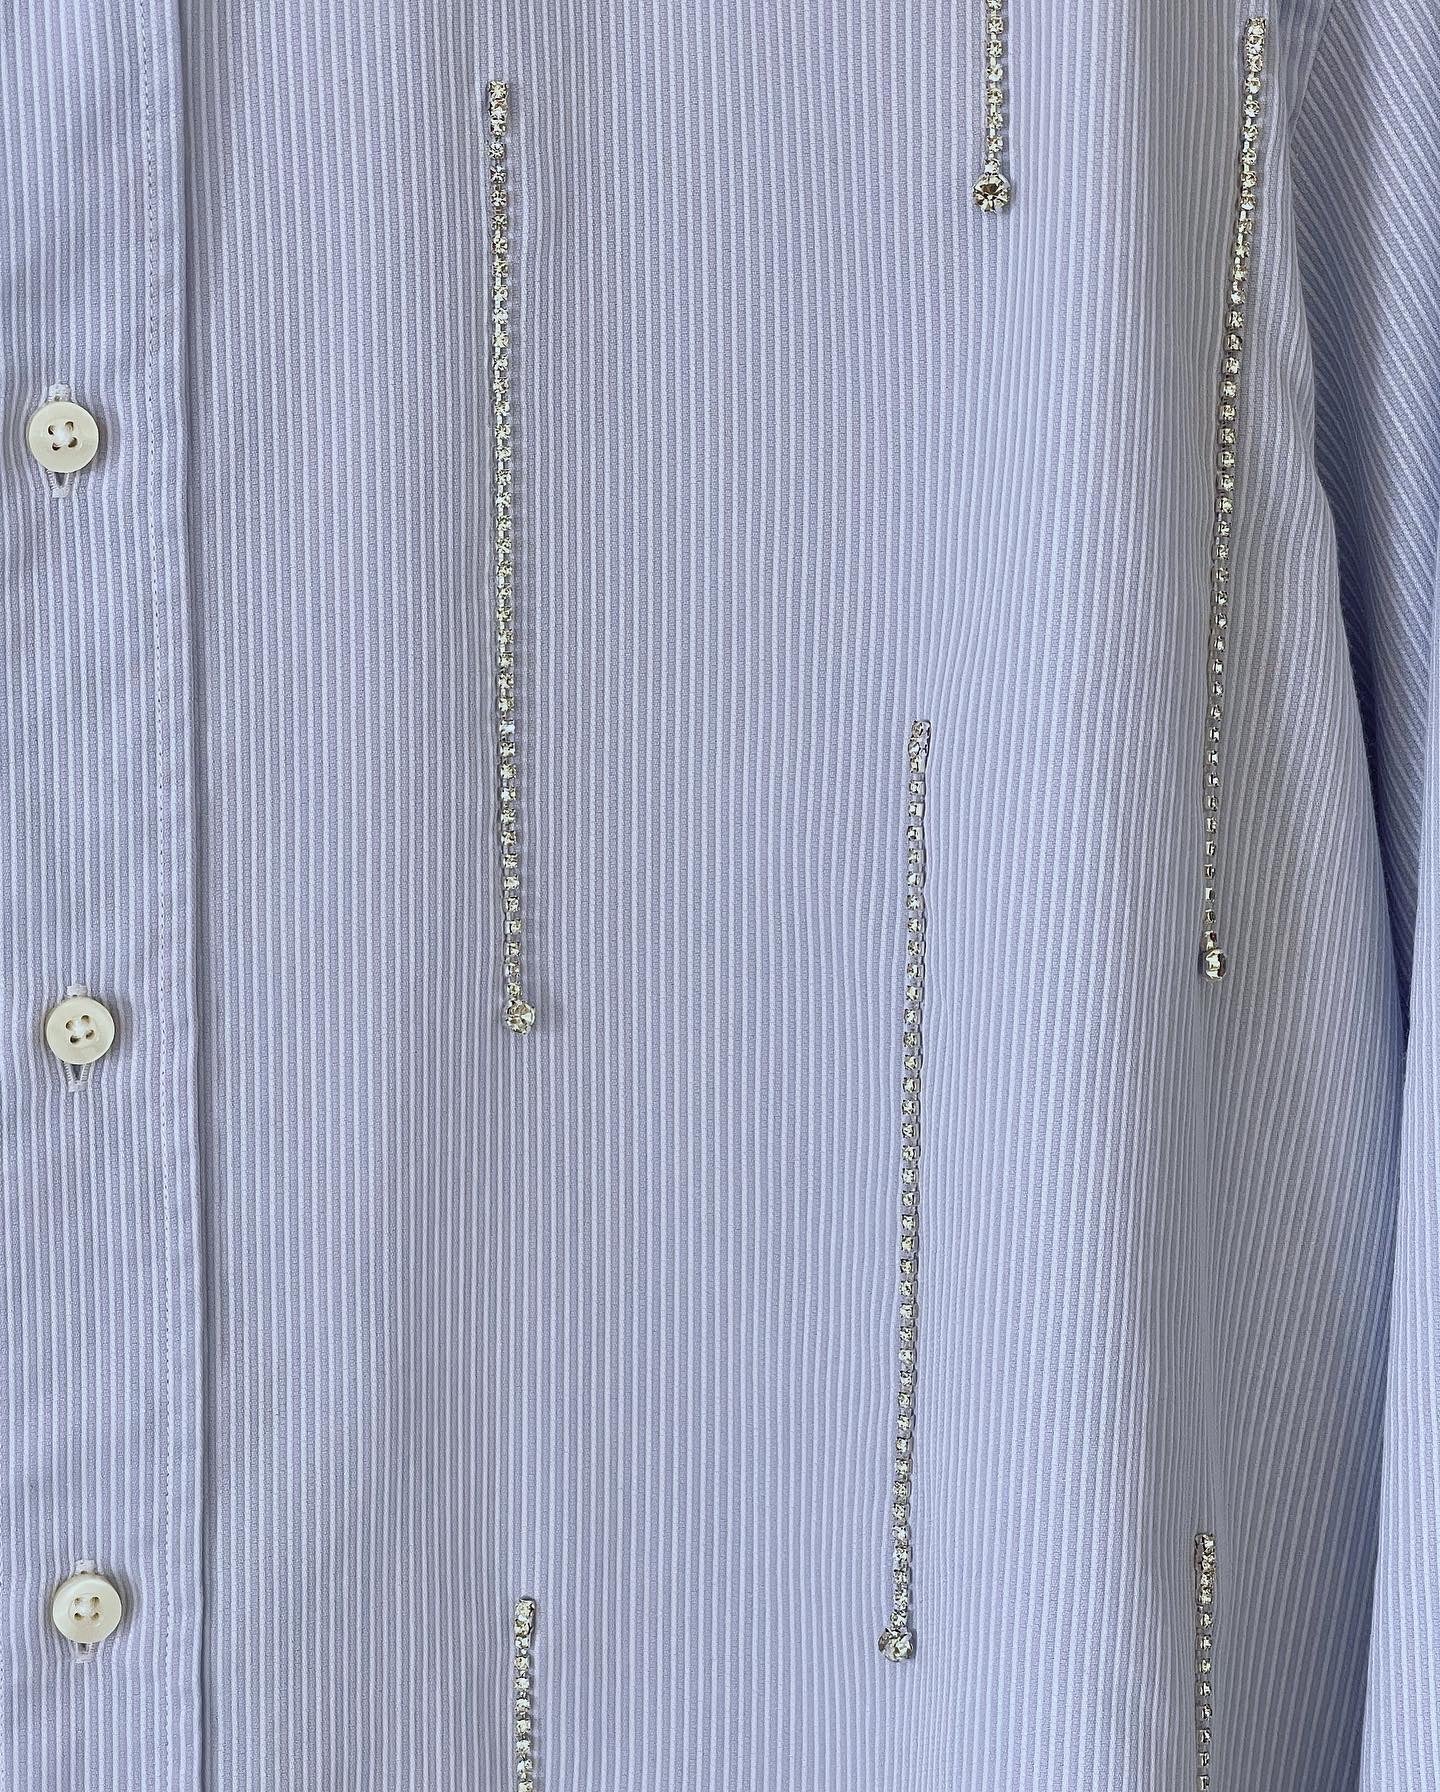 Stunning oversized men's shirt hand-decorated with rhinestone crystal chain